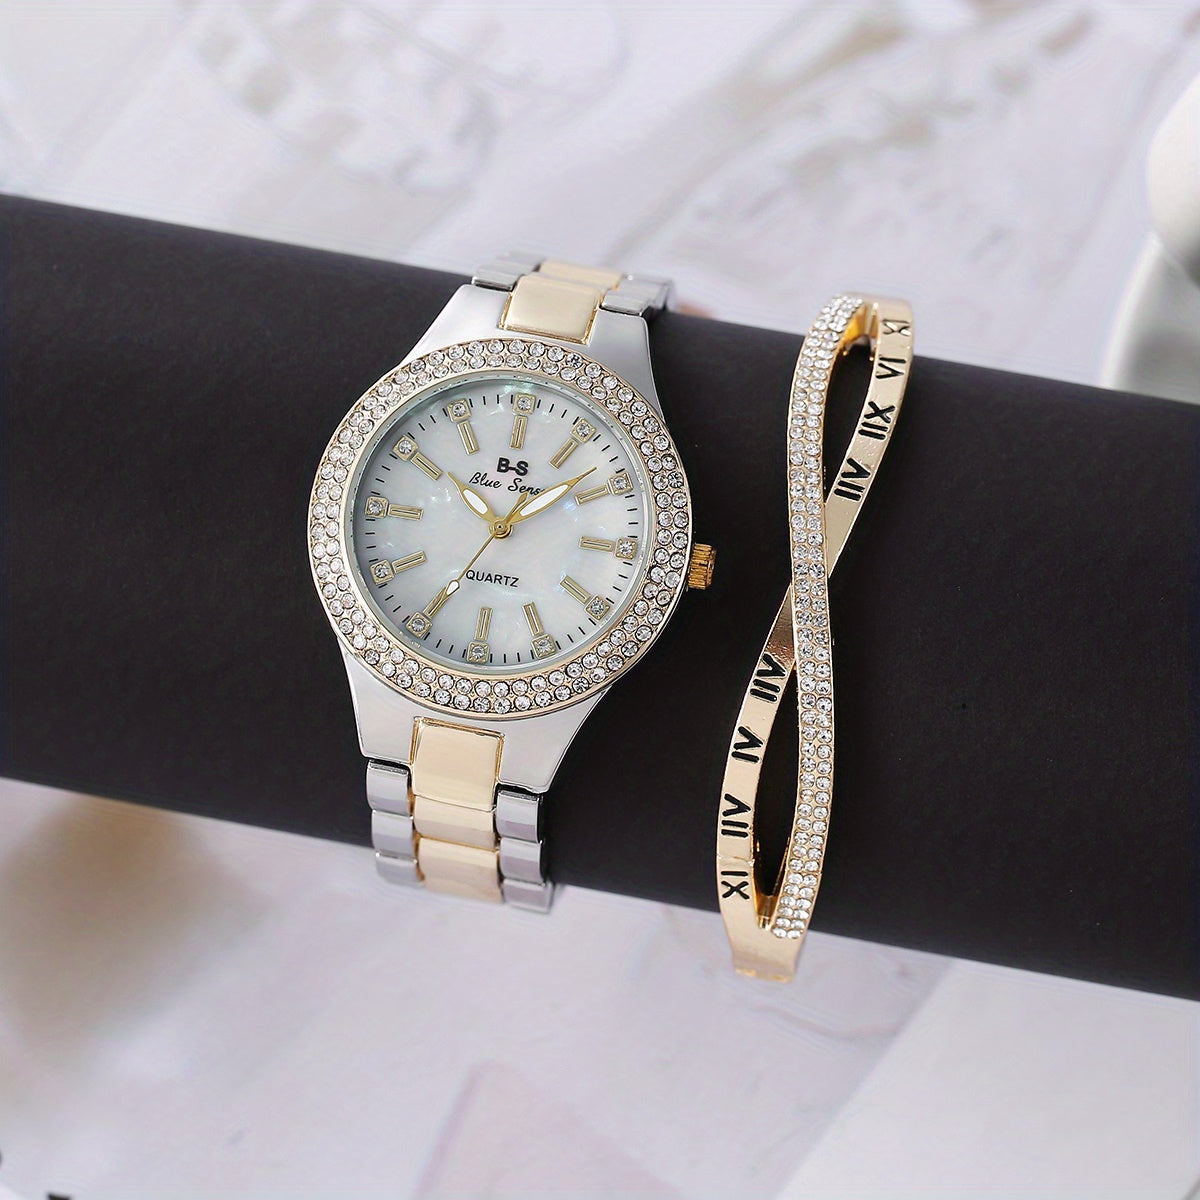 Rome Fashion Quartz Watch Luxury Rhinestone Analog Wrist Watch